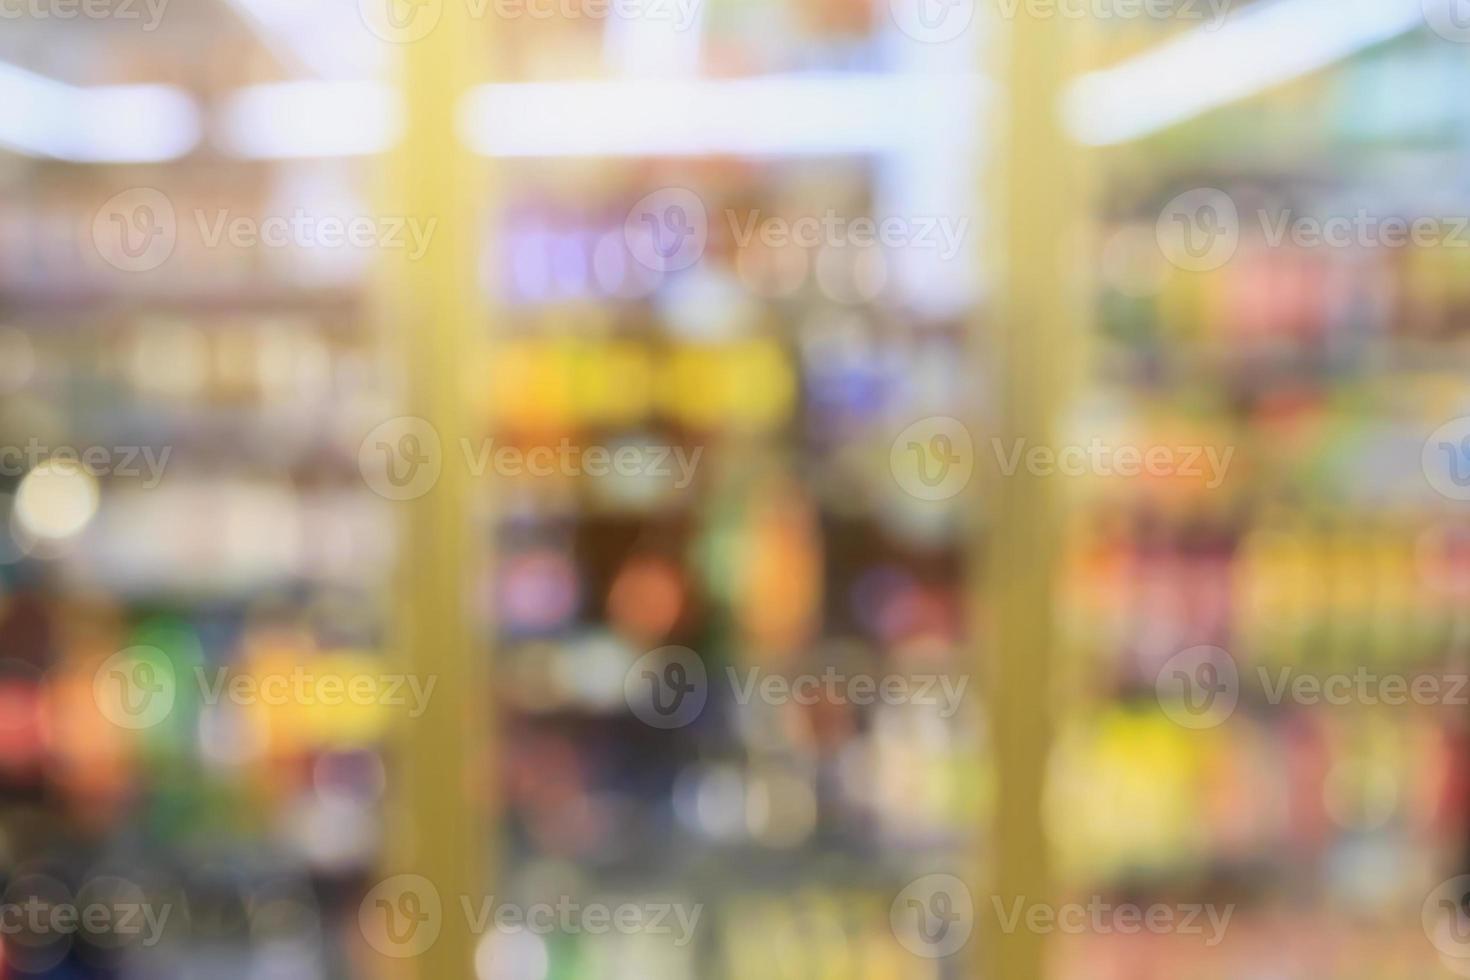 convenience store refrigerator shelves blur background photo